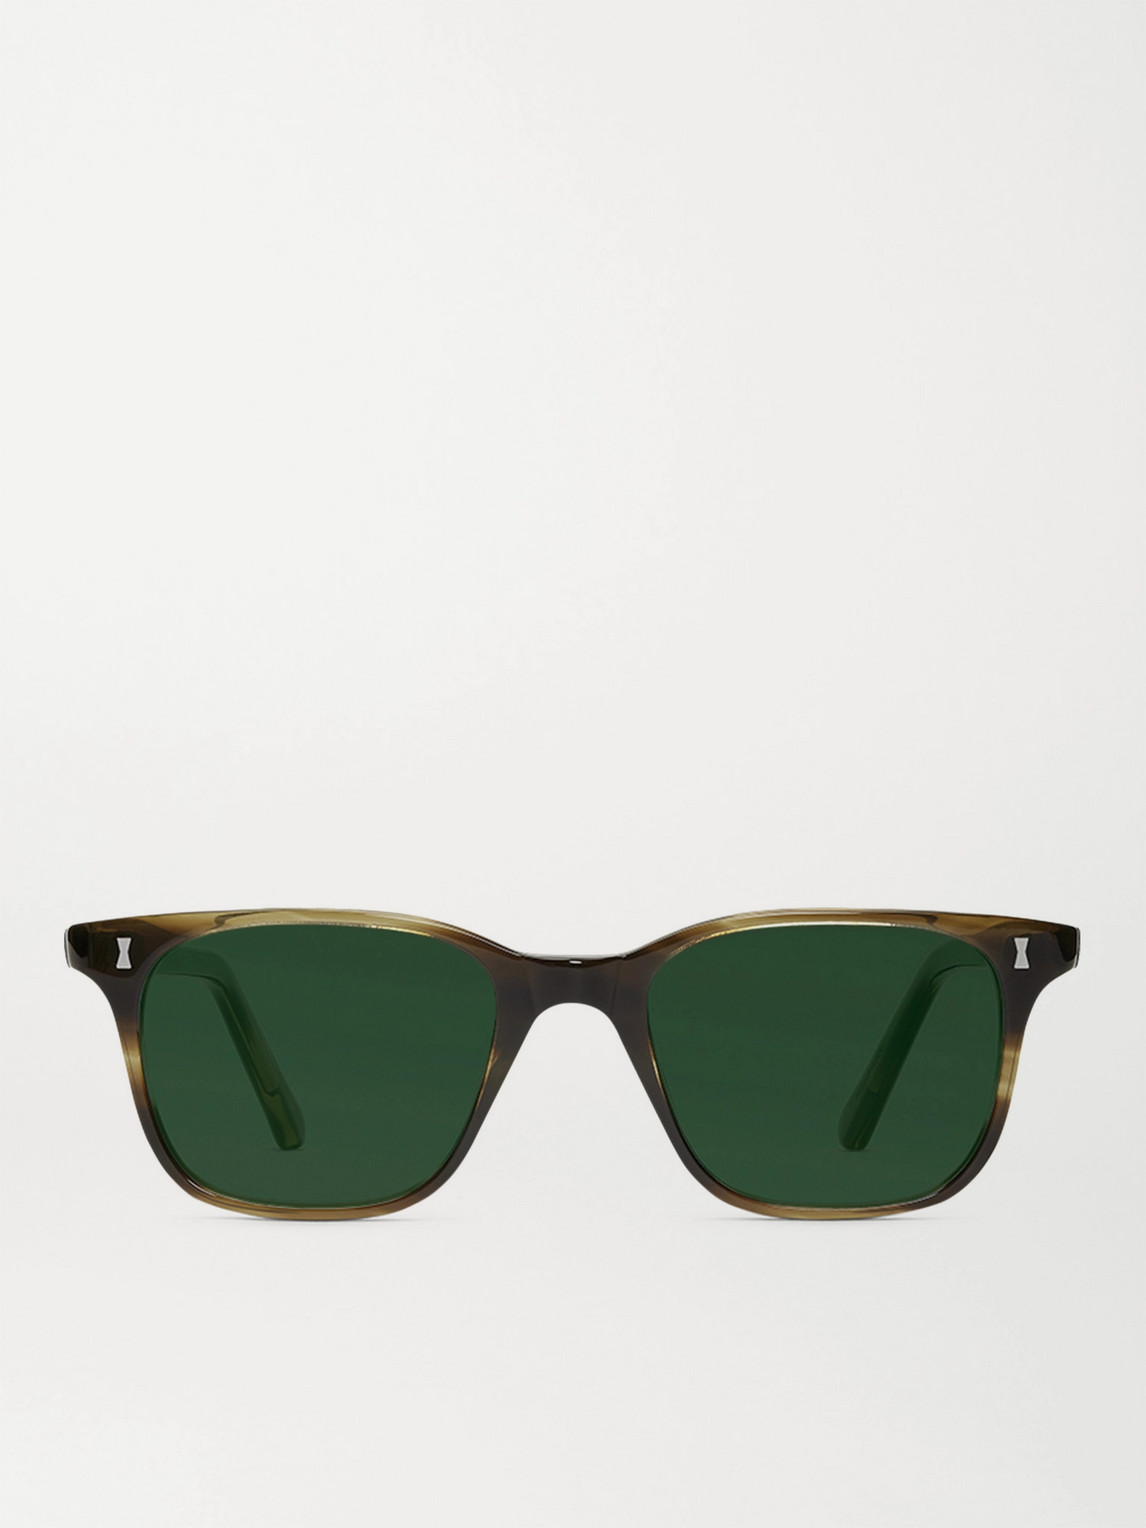 Cubitts Weston Square-frame Tortoiseshell Acetate Sunglasses